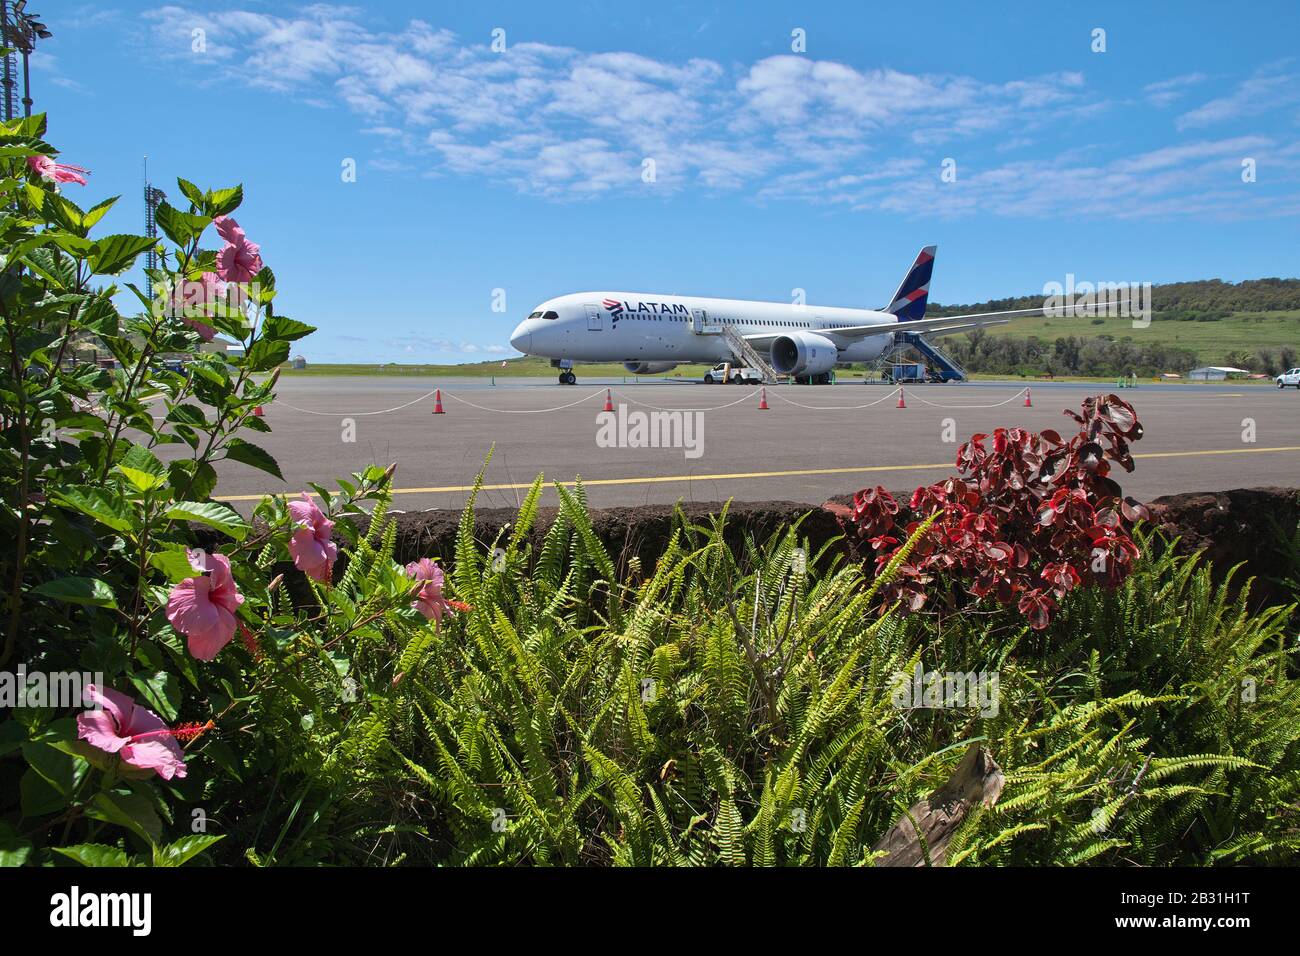 Hanga Roa, Isola di Pasqua / Cile - 29 dic 2019: Compagnie aeree LATAM nell'aeroporto Hanga Roa su Rapa Nui, Isola di Pasqua, Cile Foto Stock